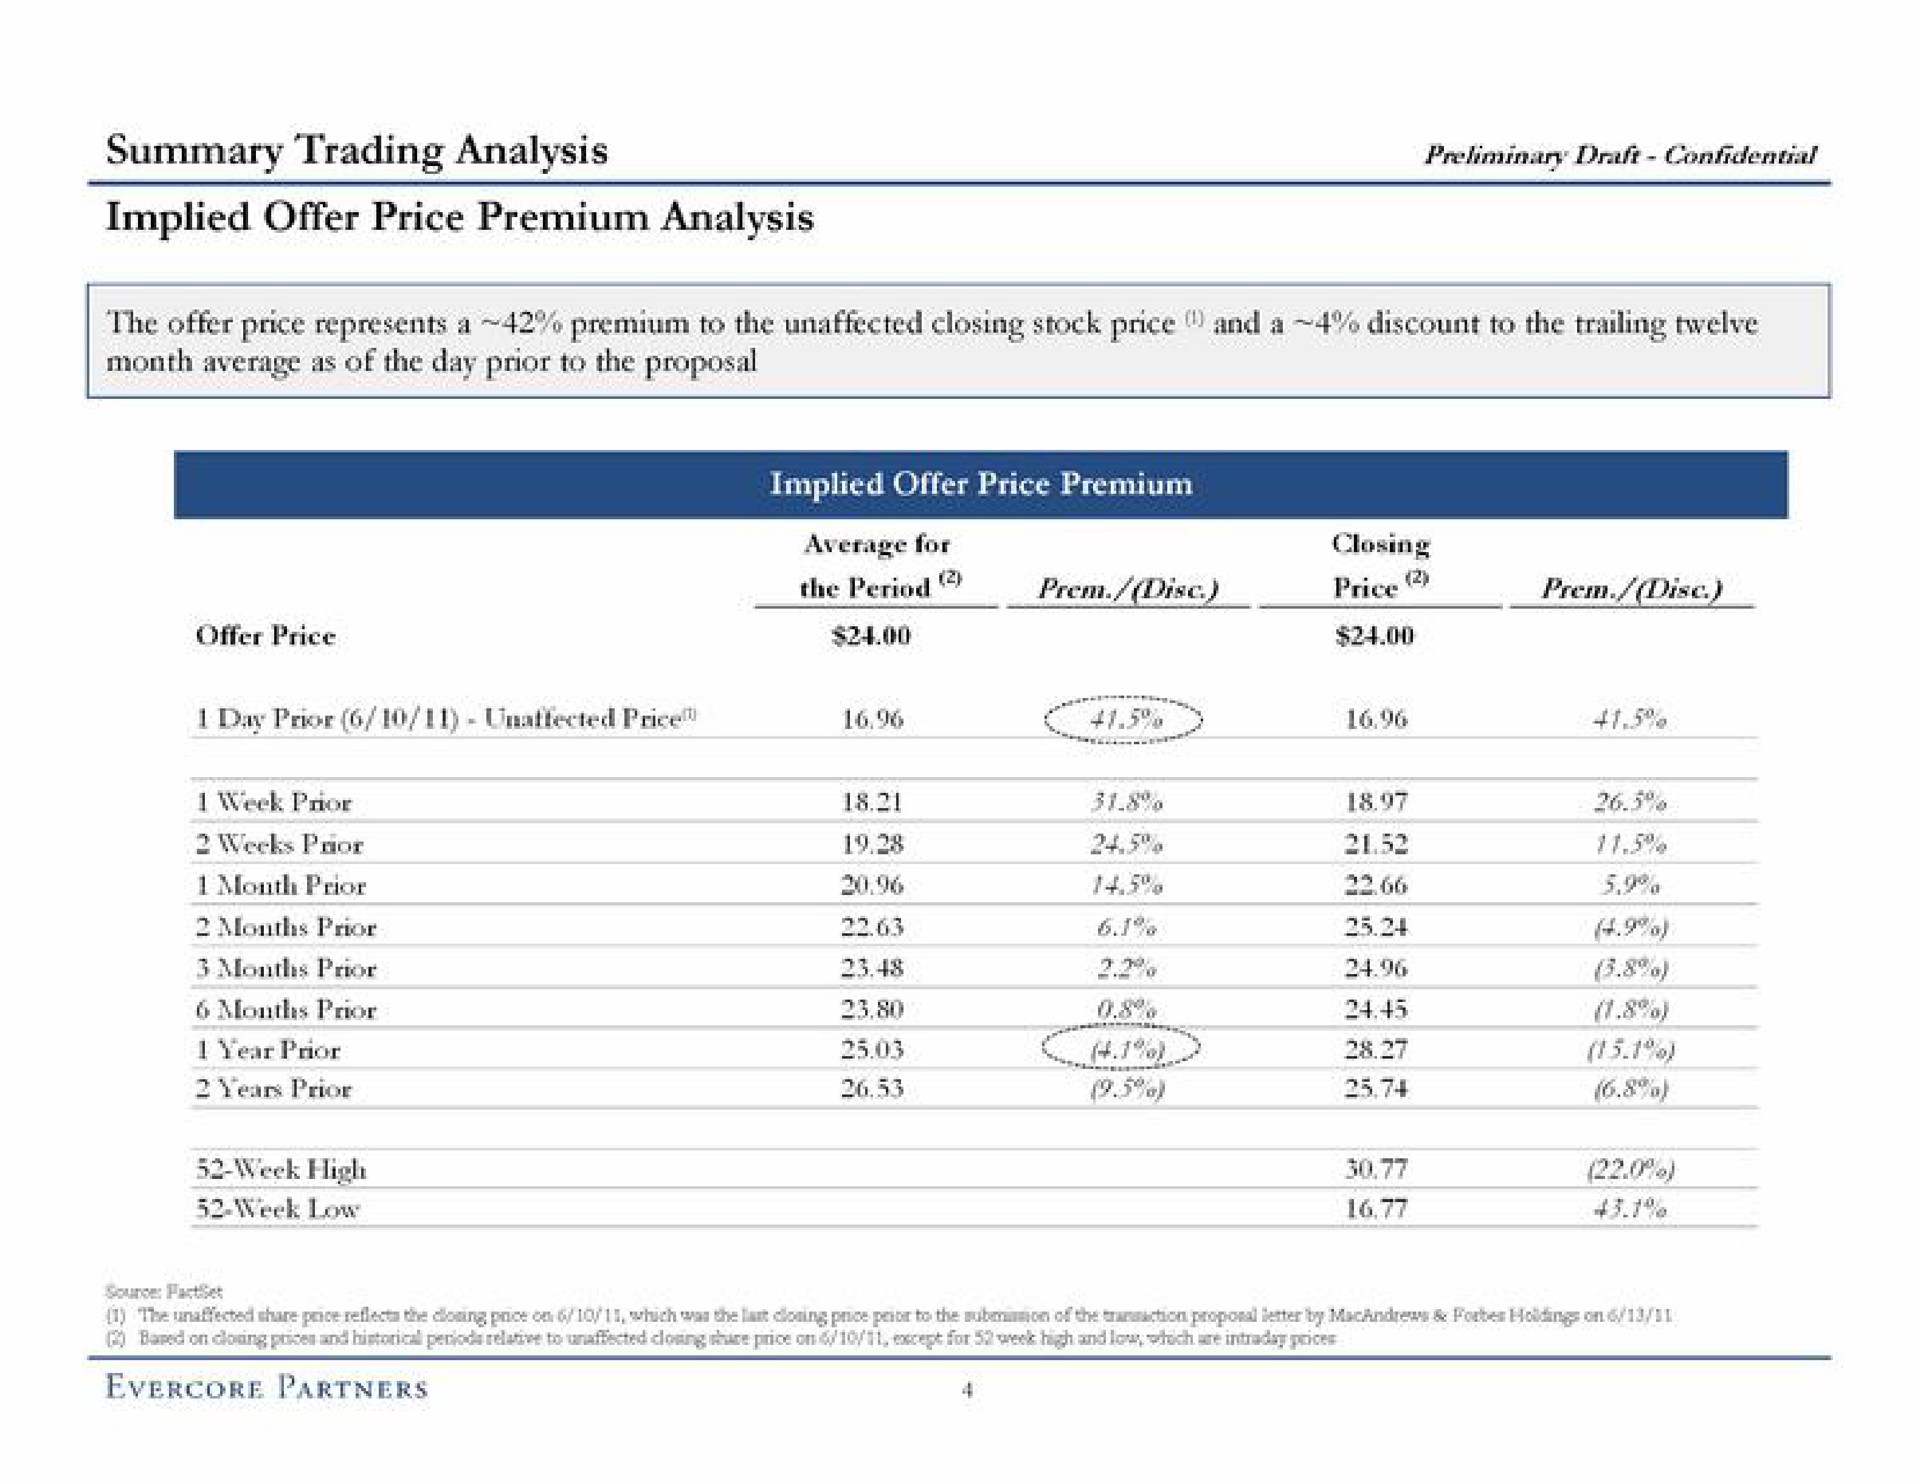 summary trading analysis implied offer price premium analysis preliminary draft confidential | Evercore